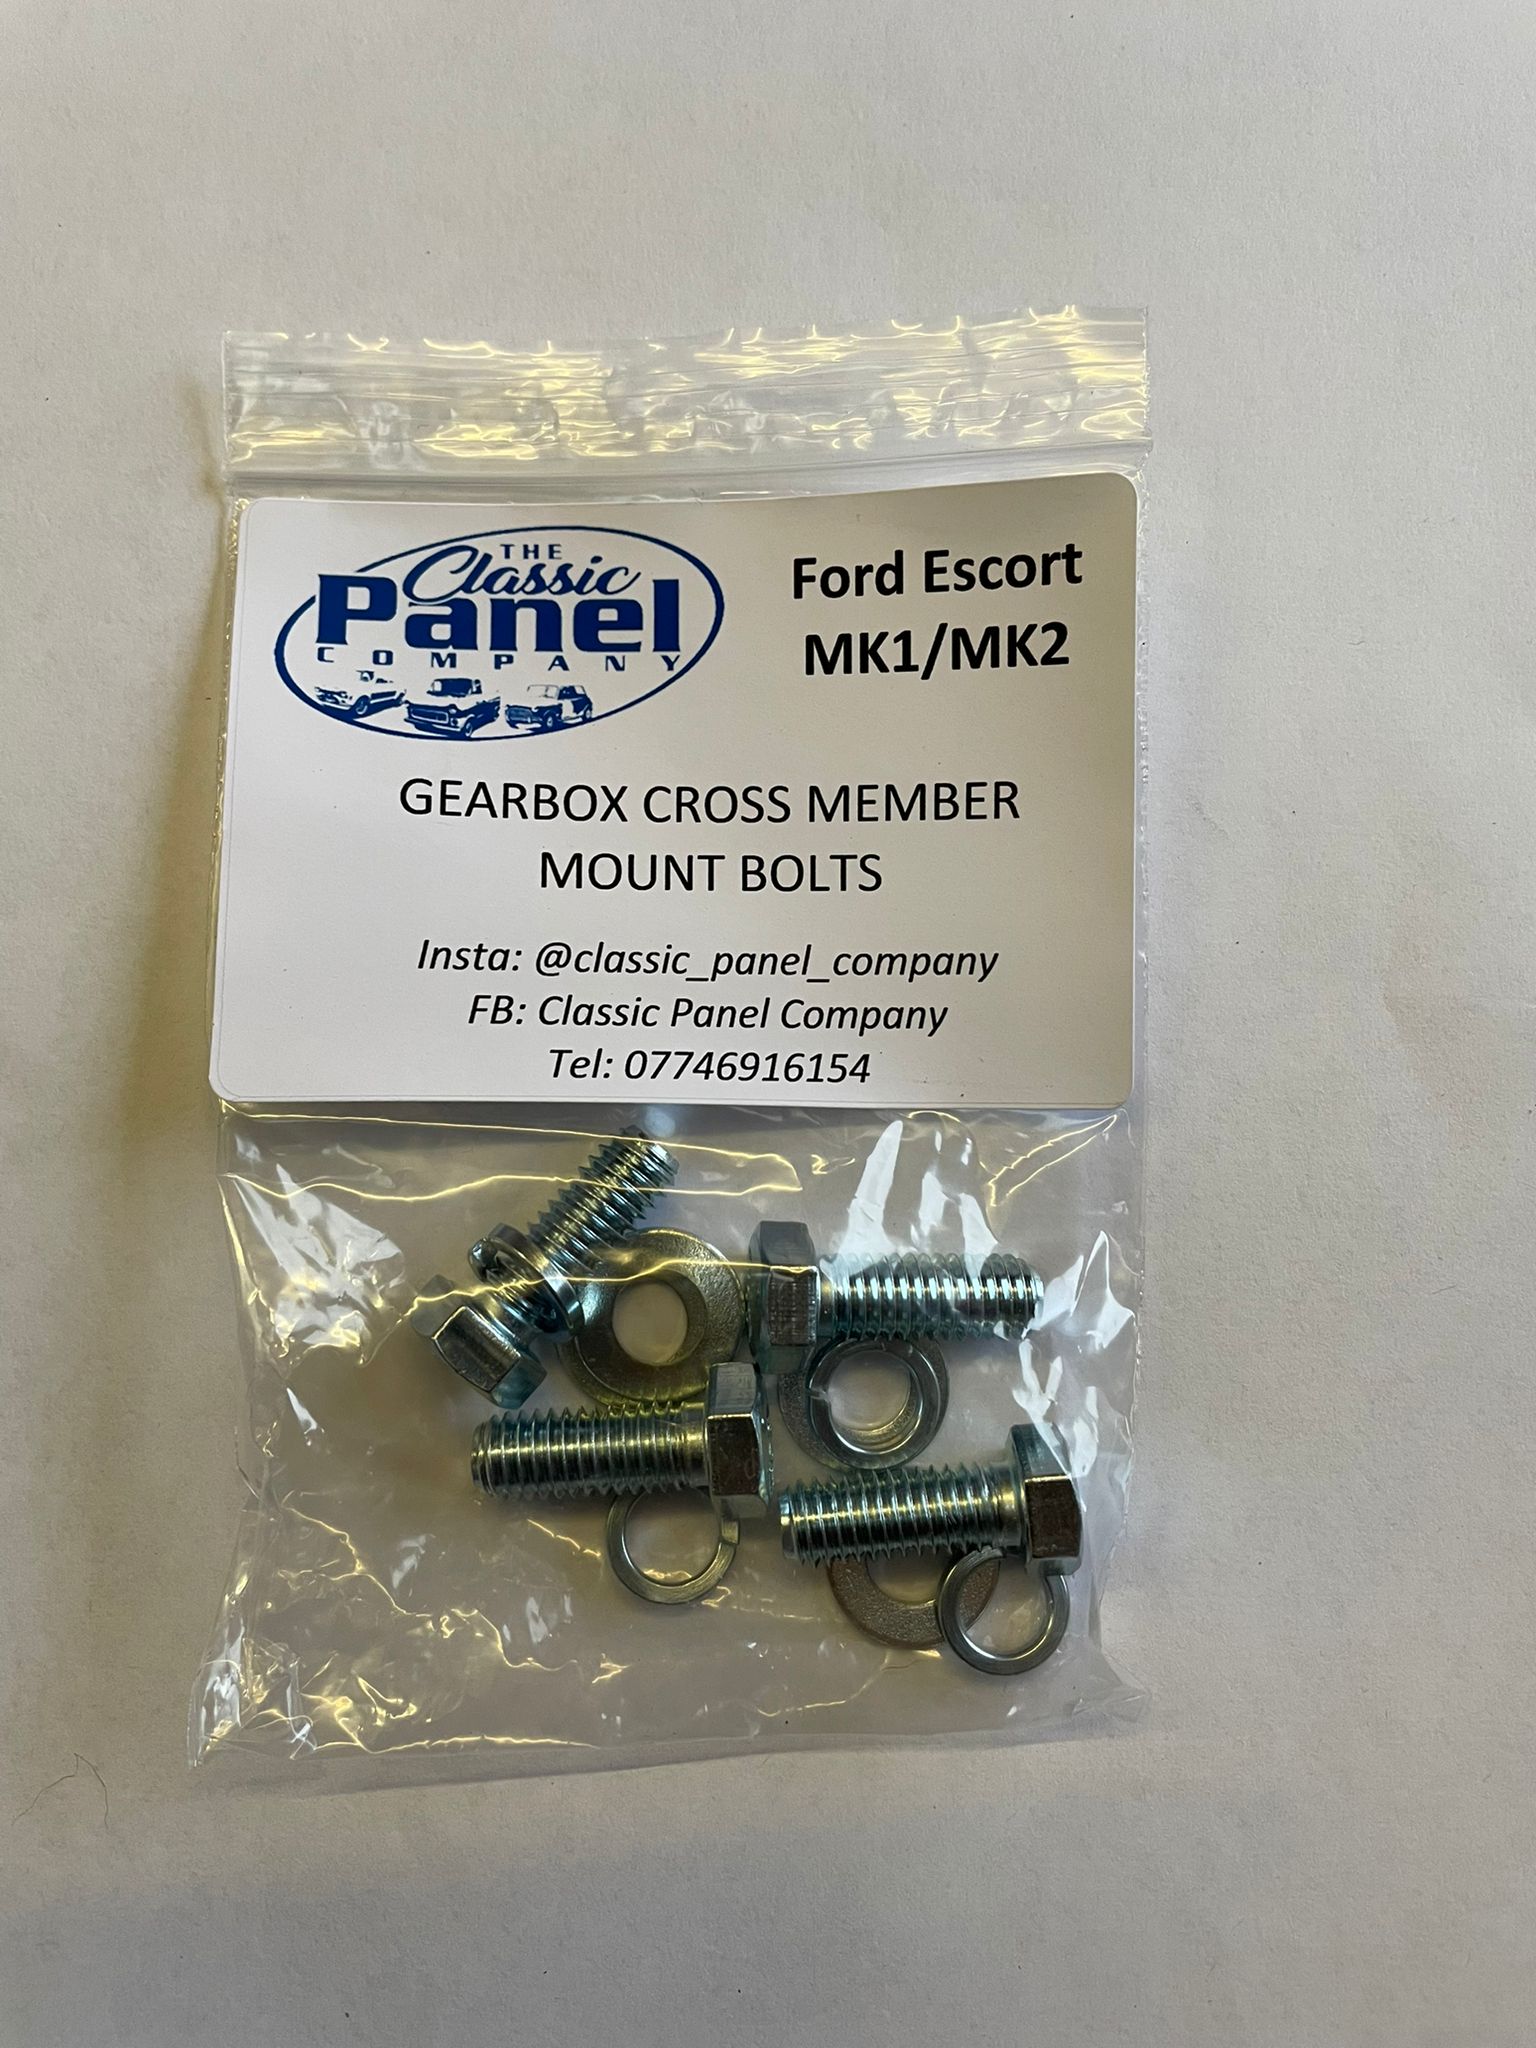 Ford Escort MK1 & MK2 Gearbox Cross Member Mount Bolts